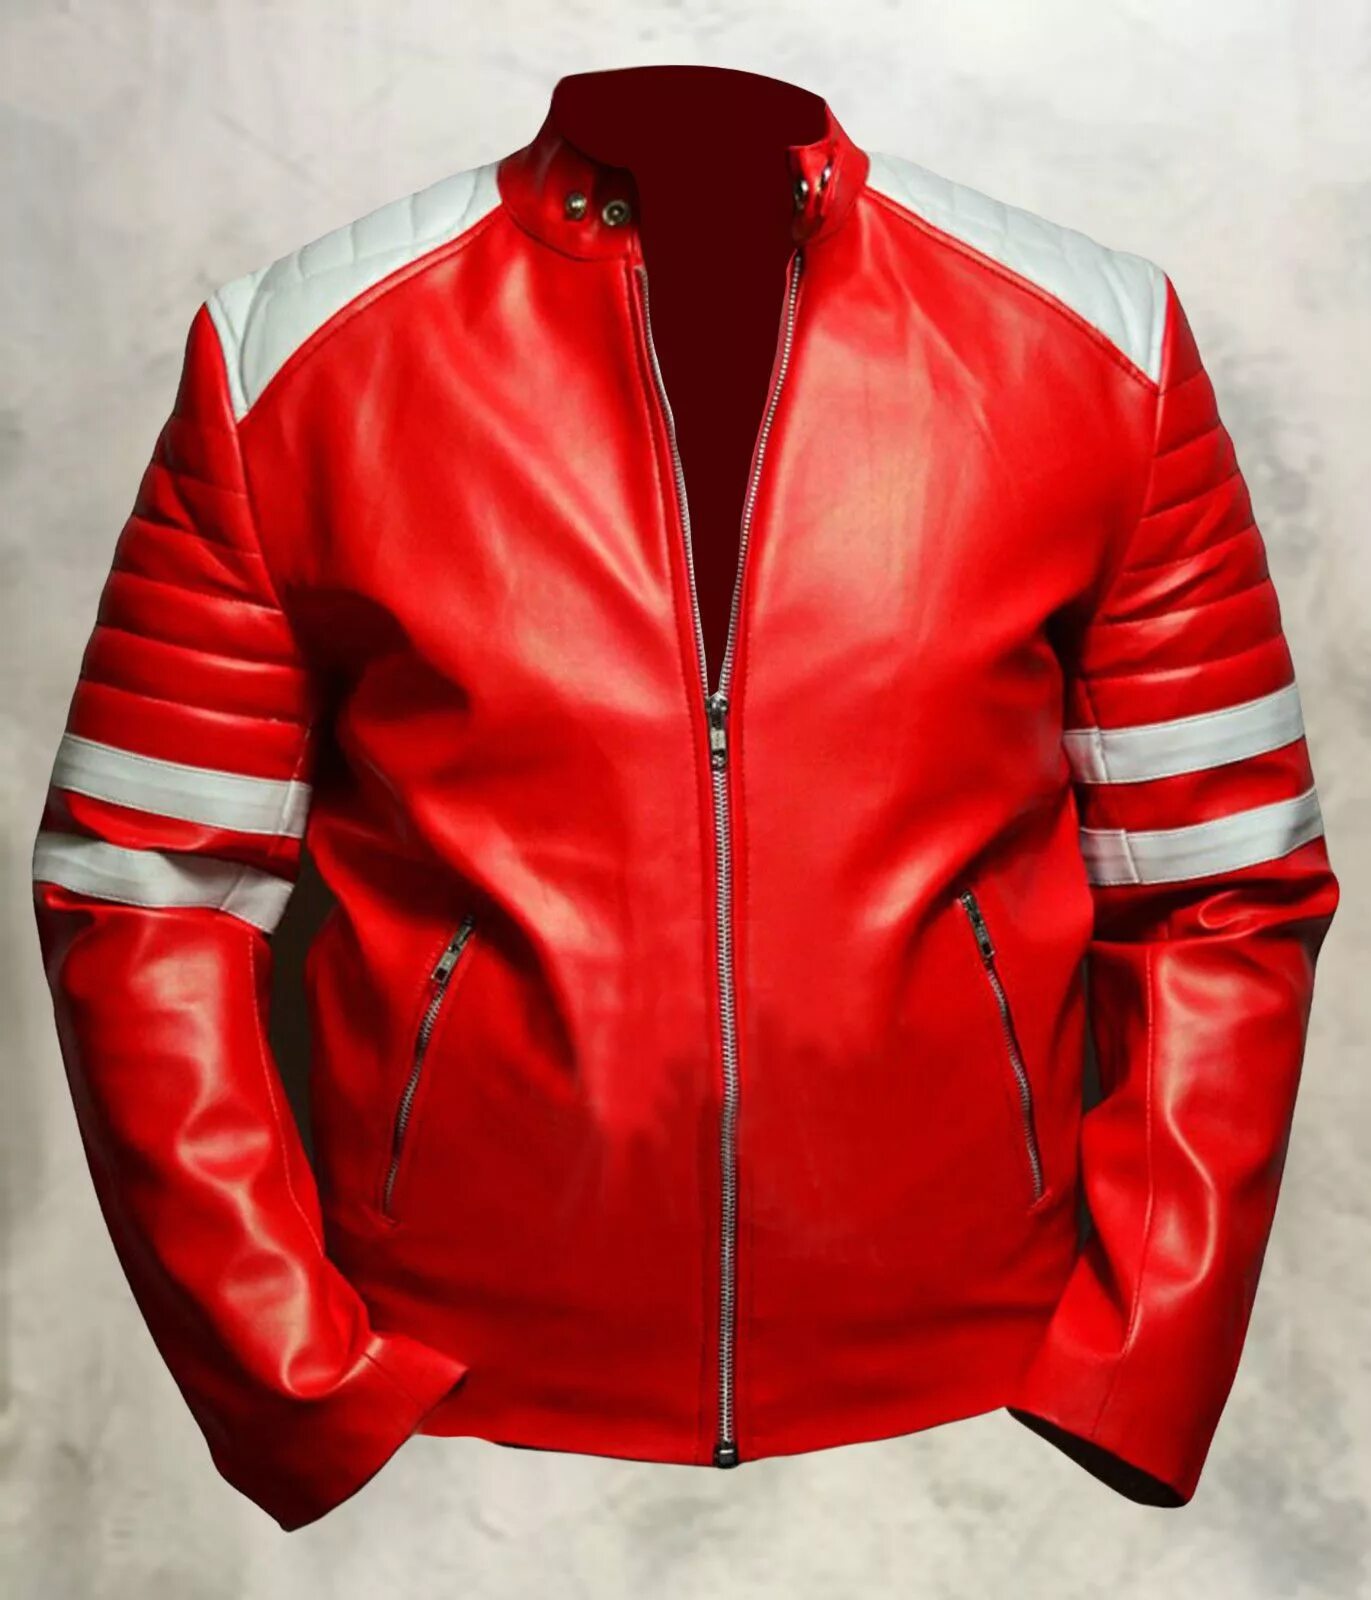 Красная кожаная куртка Тайлера Дердена. Кожаная куртка Тайлера Дердена. Одежда тайлера дердена